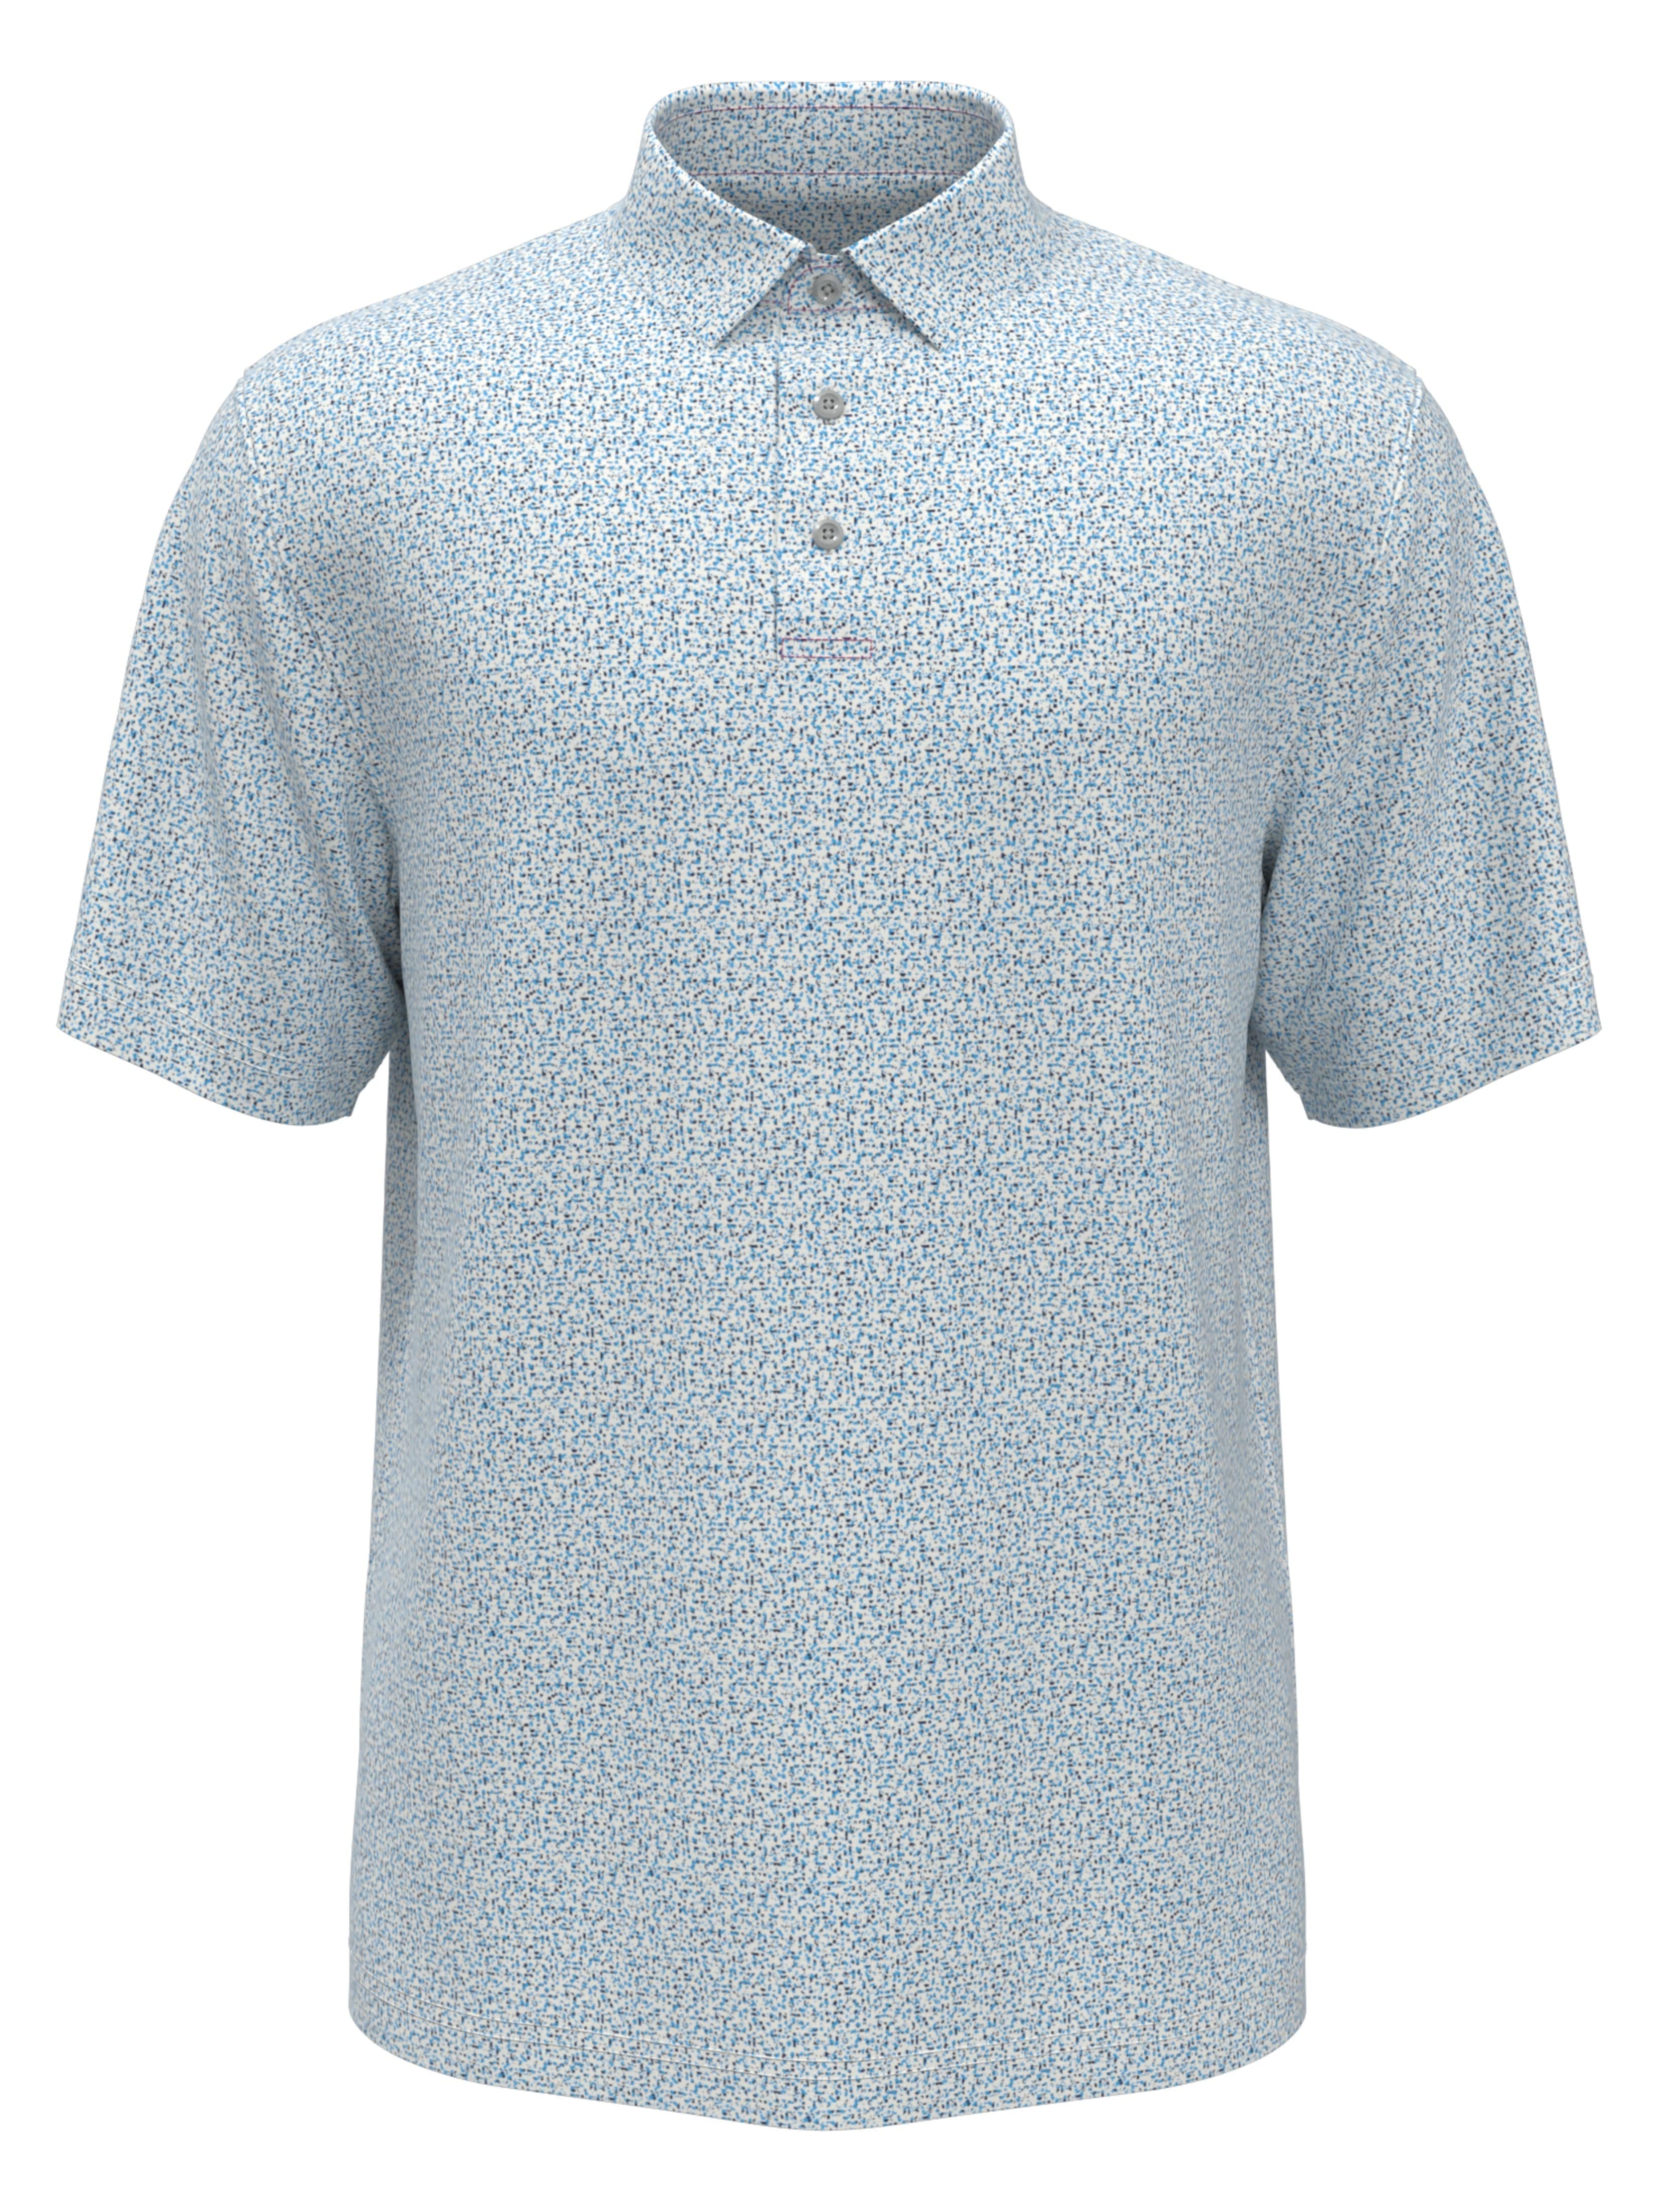 PGA TOUR Apparel Boys Micro Geo Printed Golf Polo Shirt, Size Large, White Blue, 100% Polyester | Golf Apparel Shop